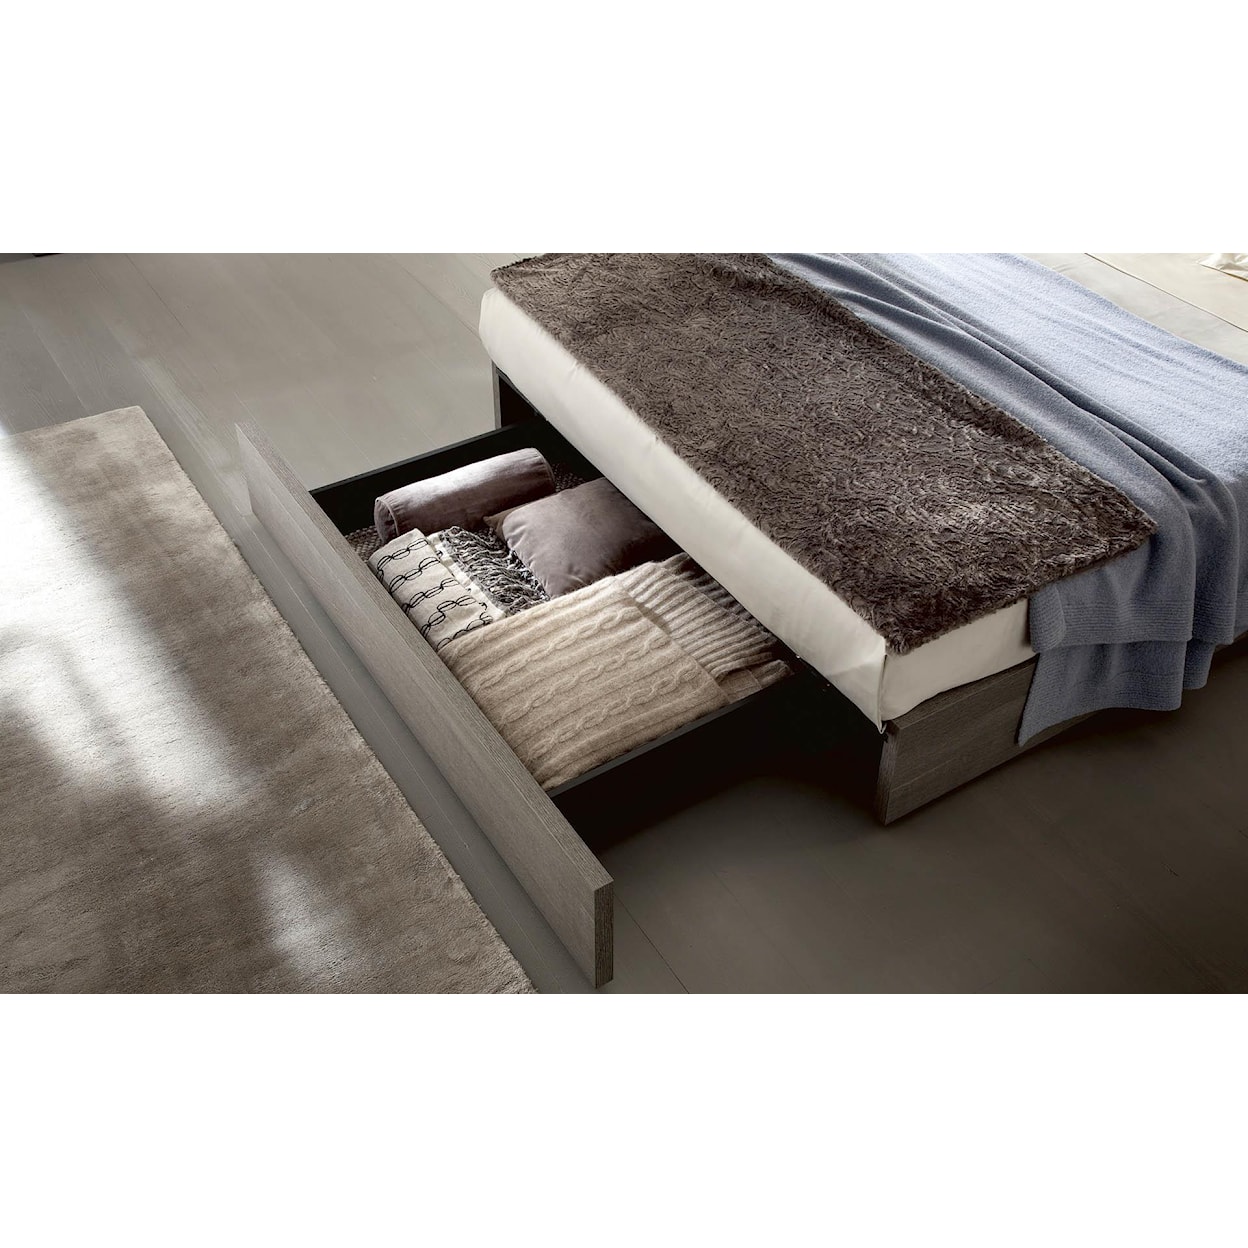 Alf Italia Tivoli King Bed with Storage Drawer